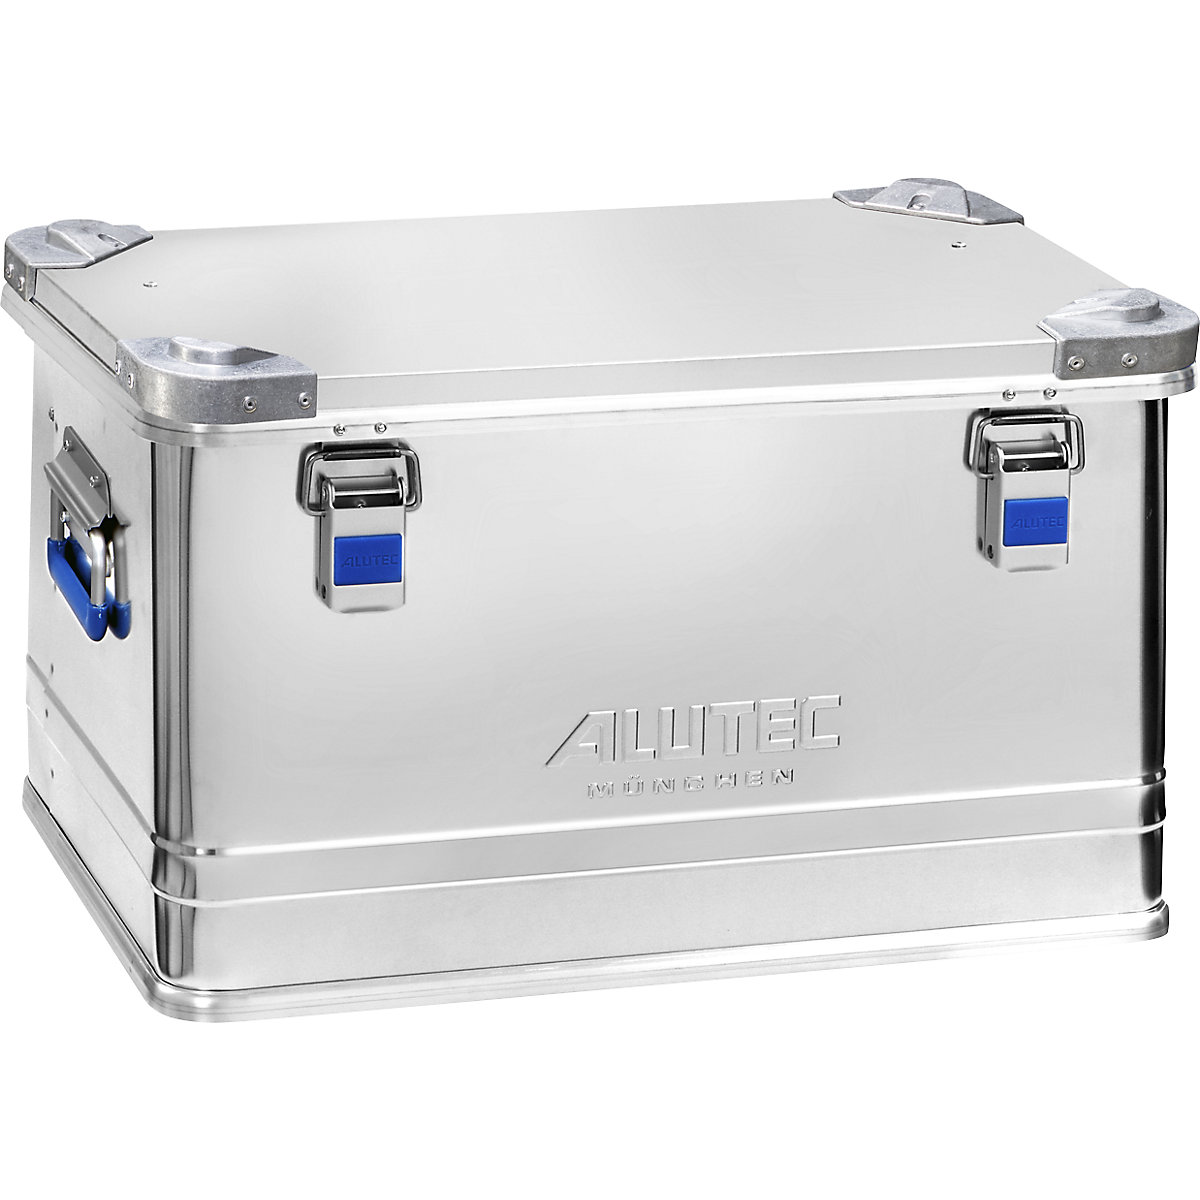 Zarges Eurobox Aluminium Box 155l 2020 camping box